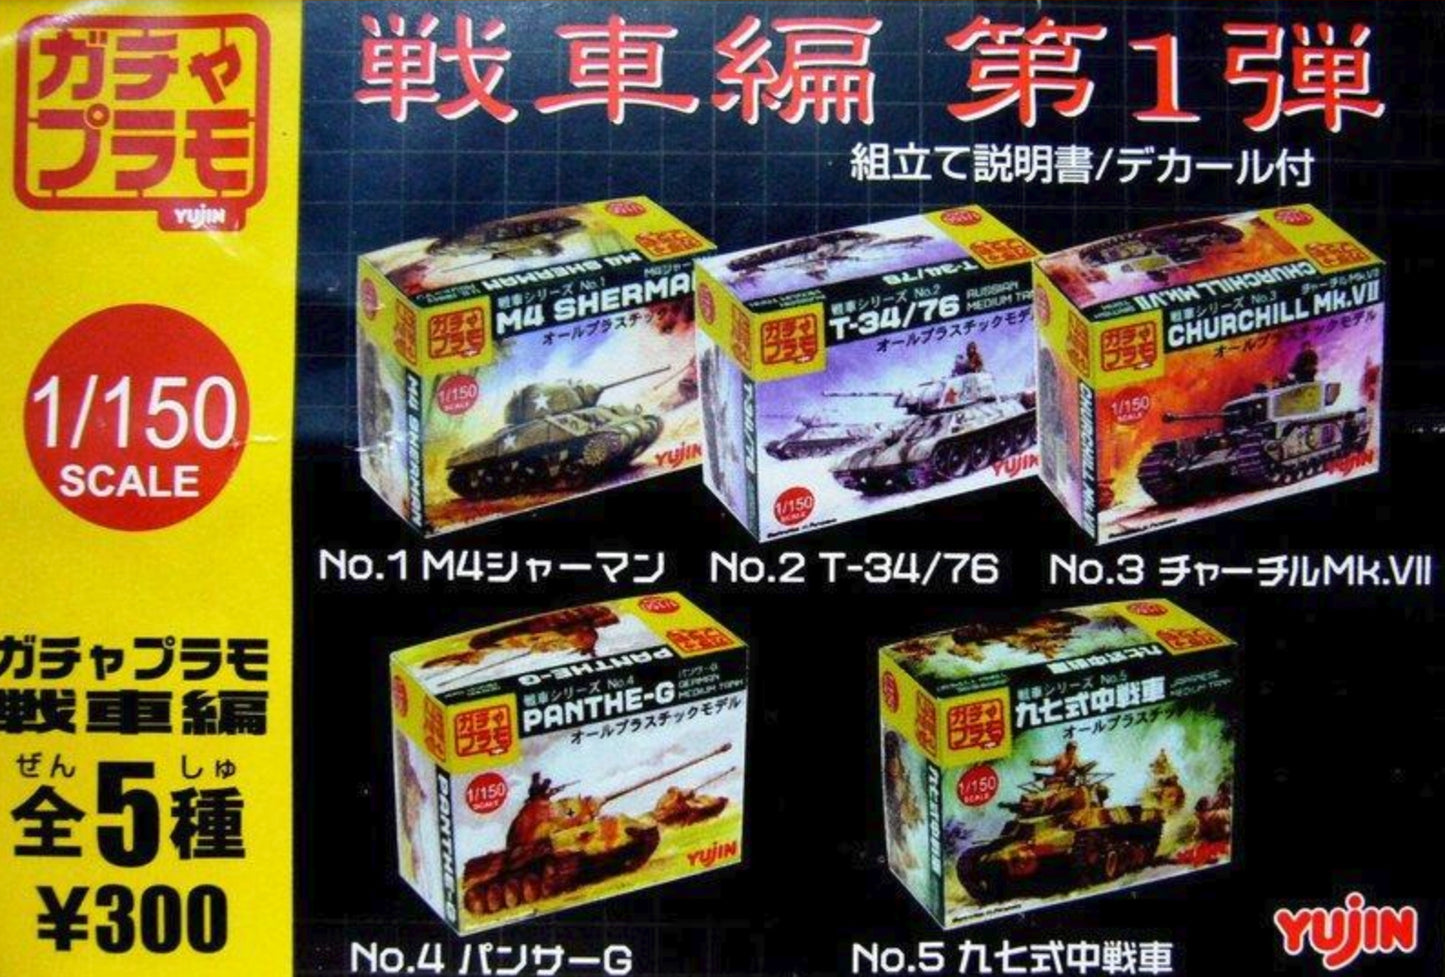 Yujin 1/150 Gashapon Tank Mini Collection 5 Trading Figure Set